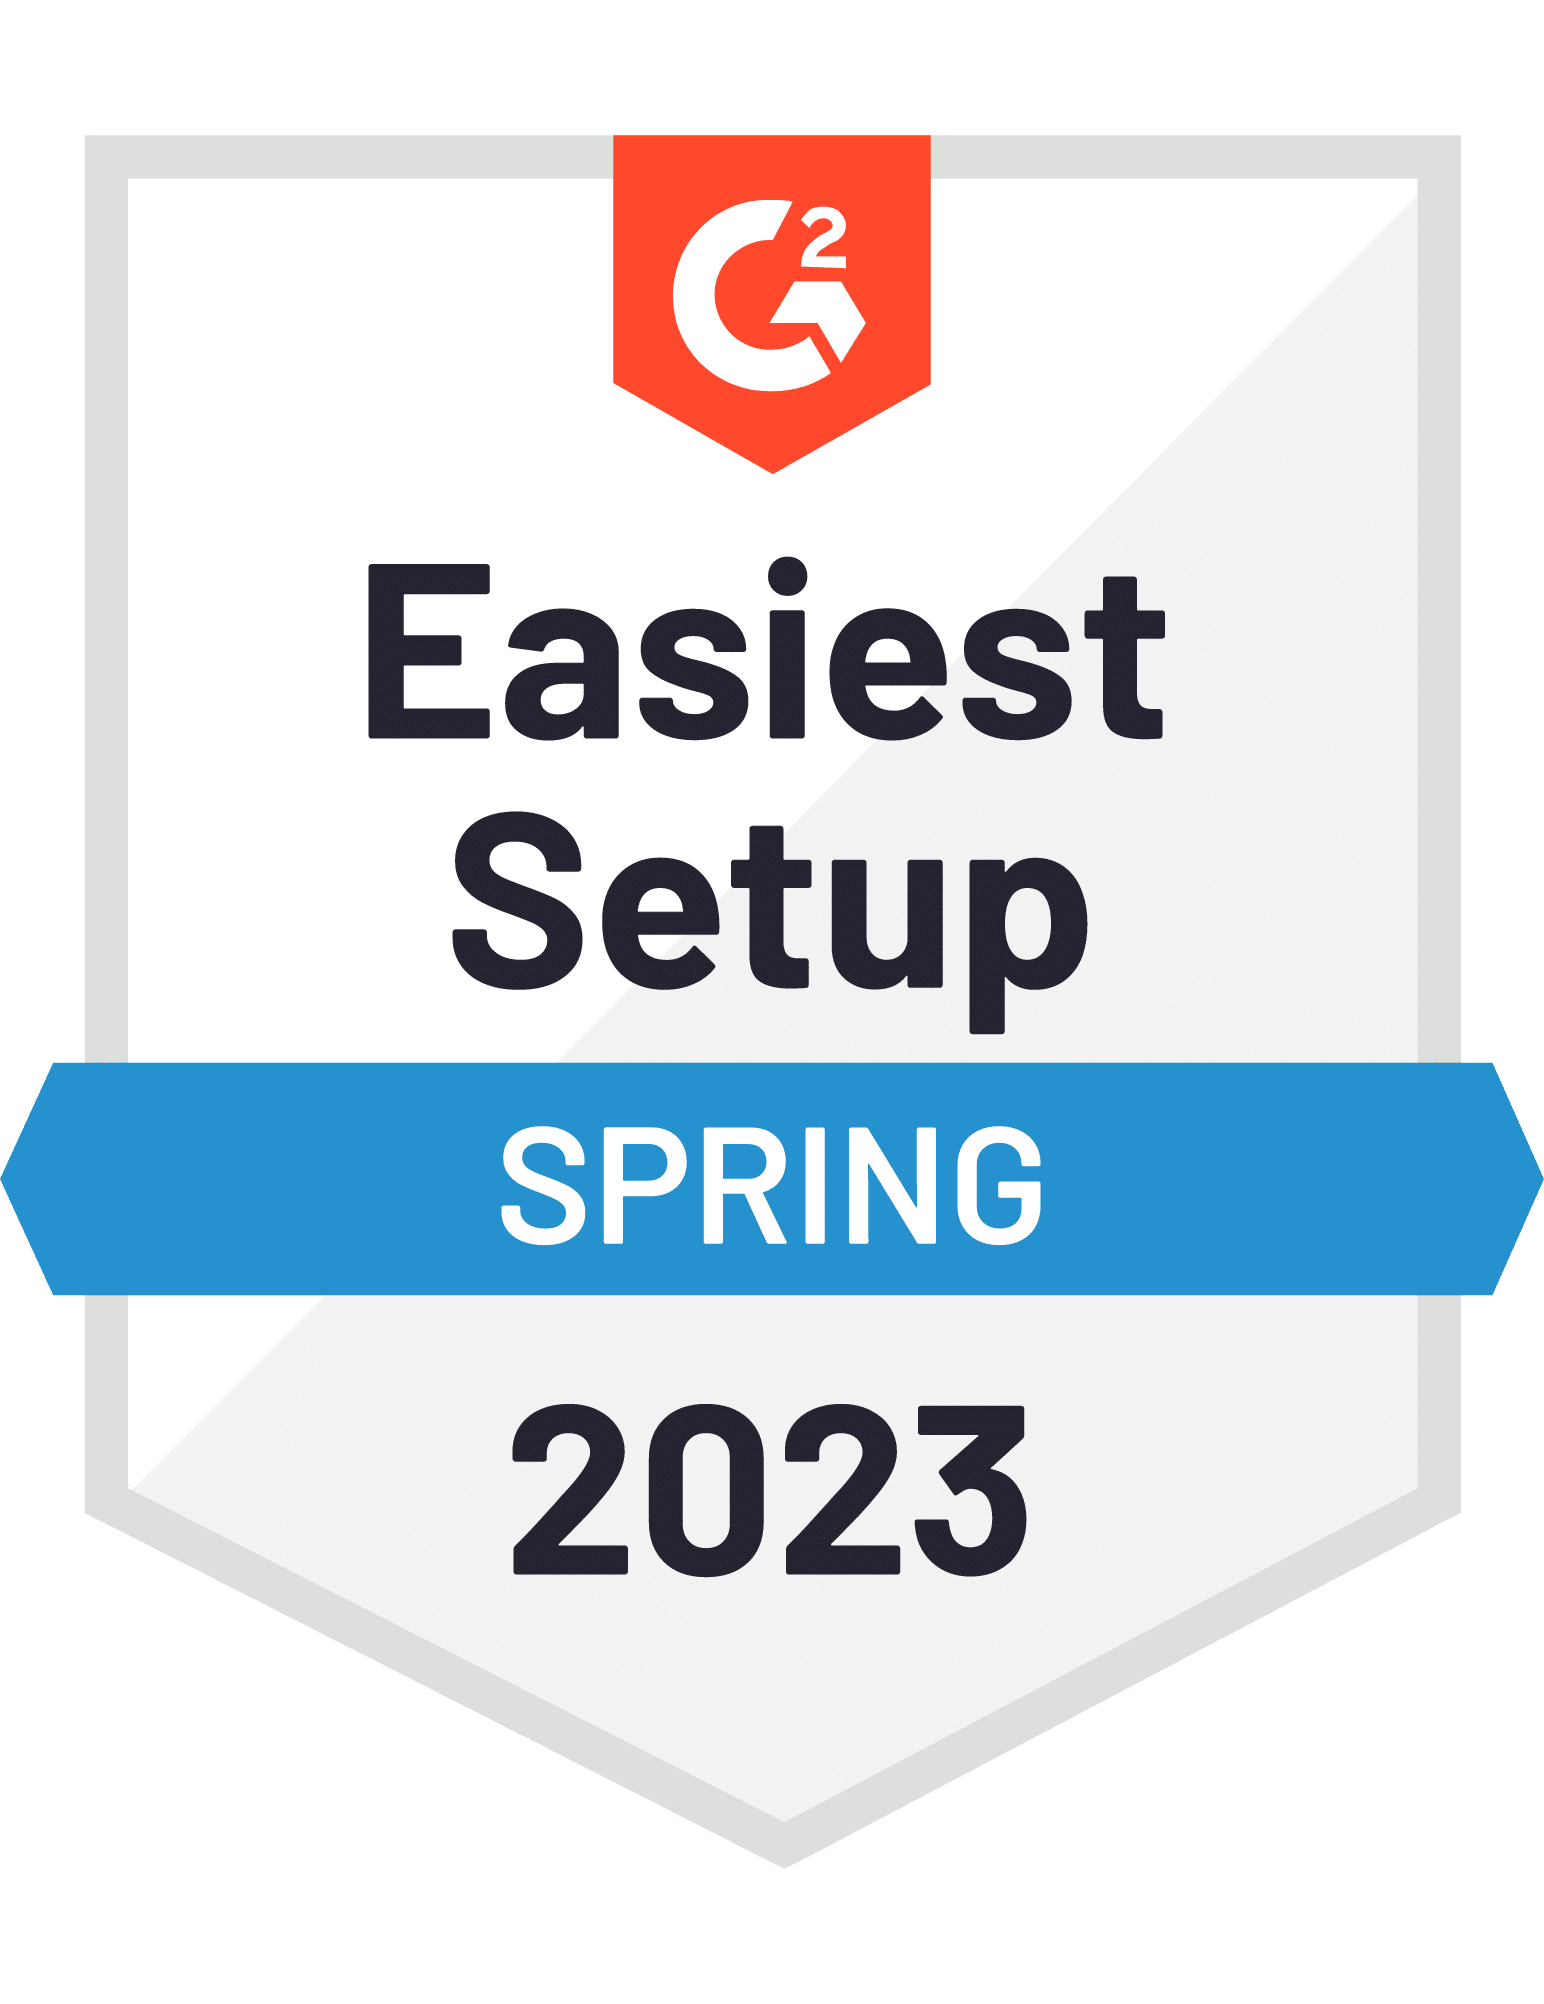 Easiest Setup Spring 2023 G2 Award